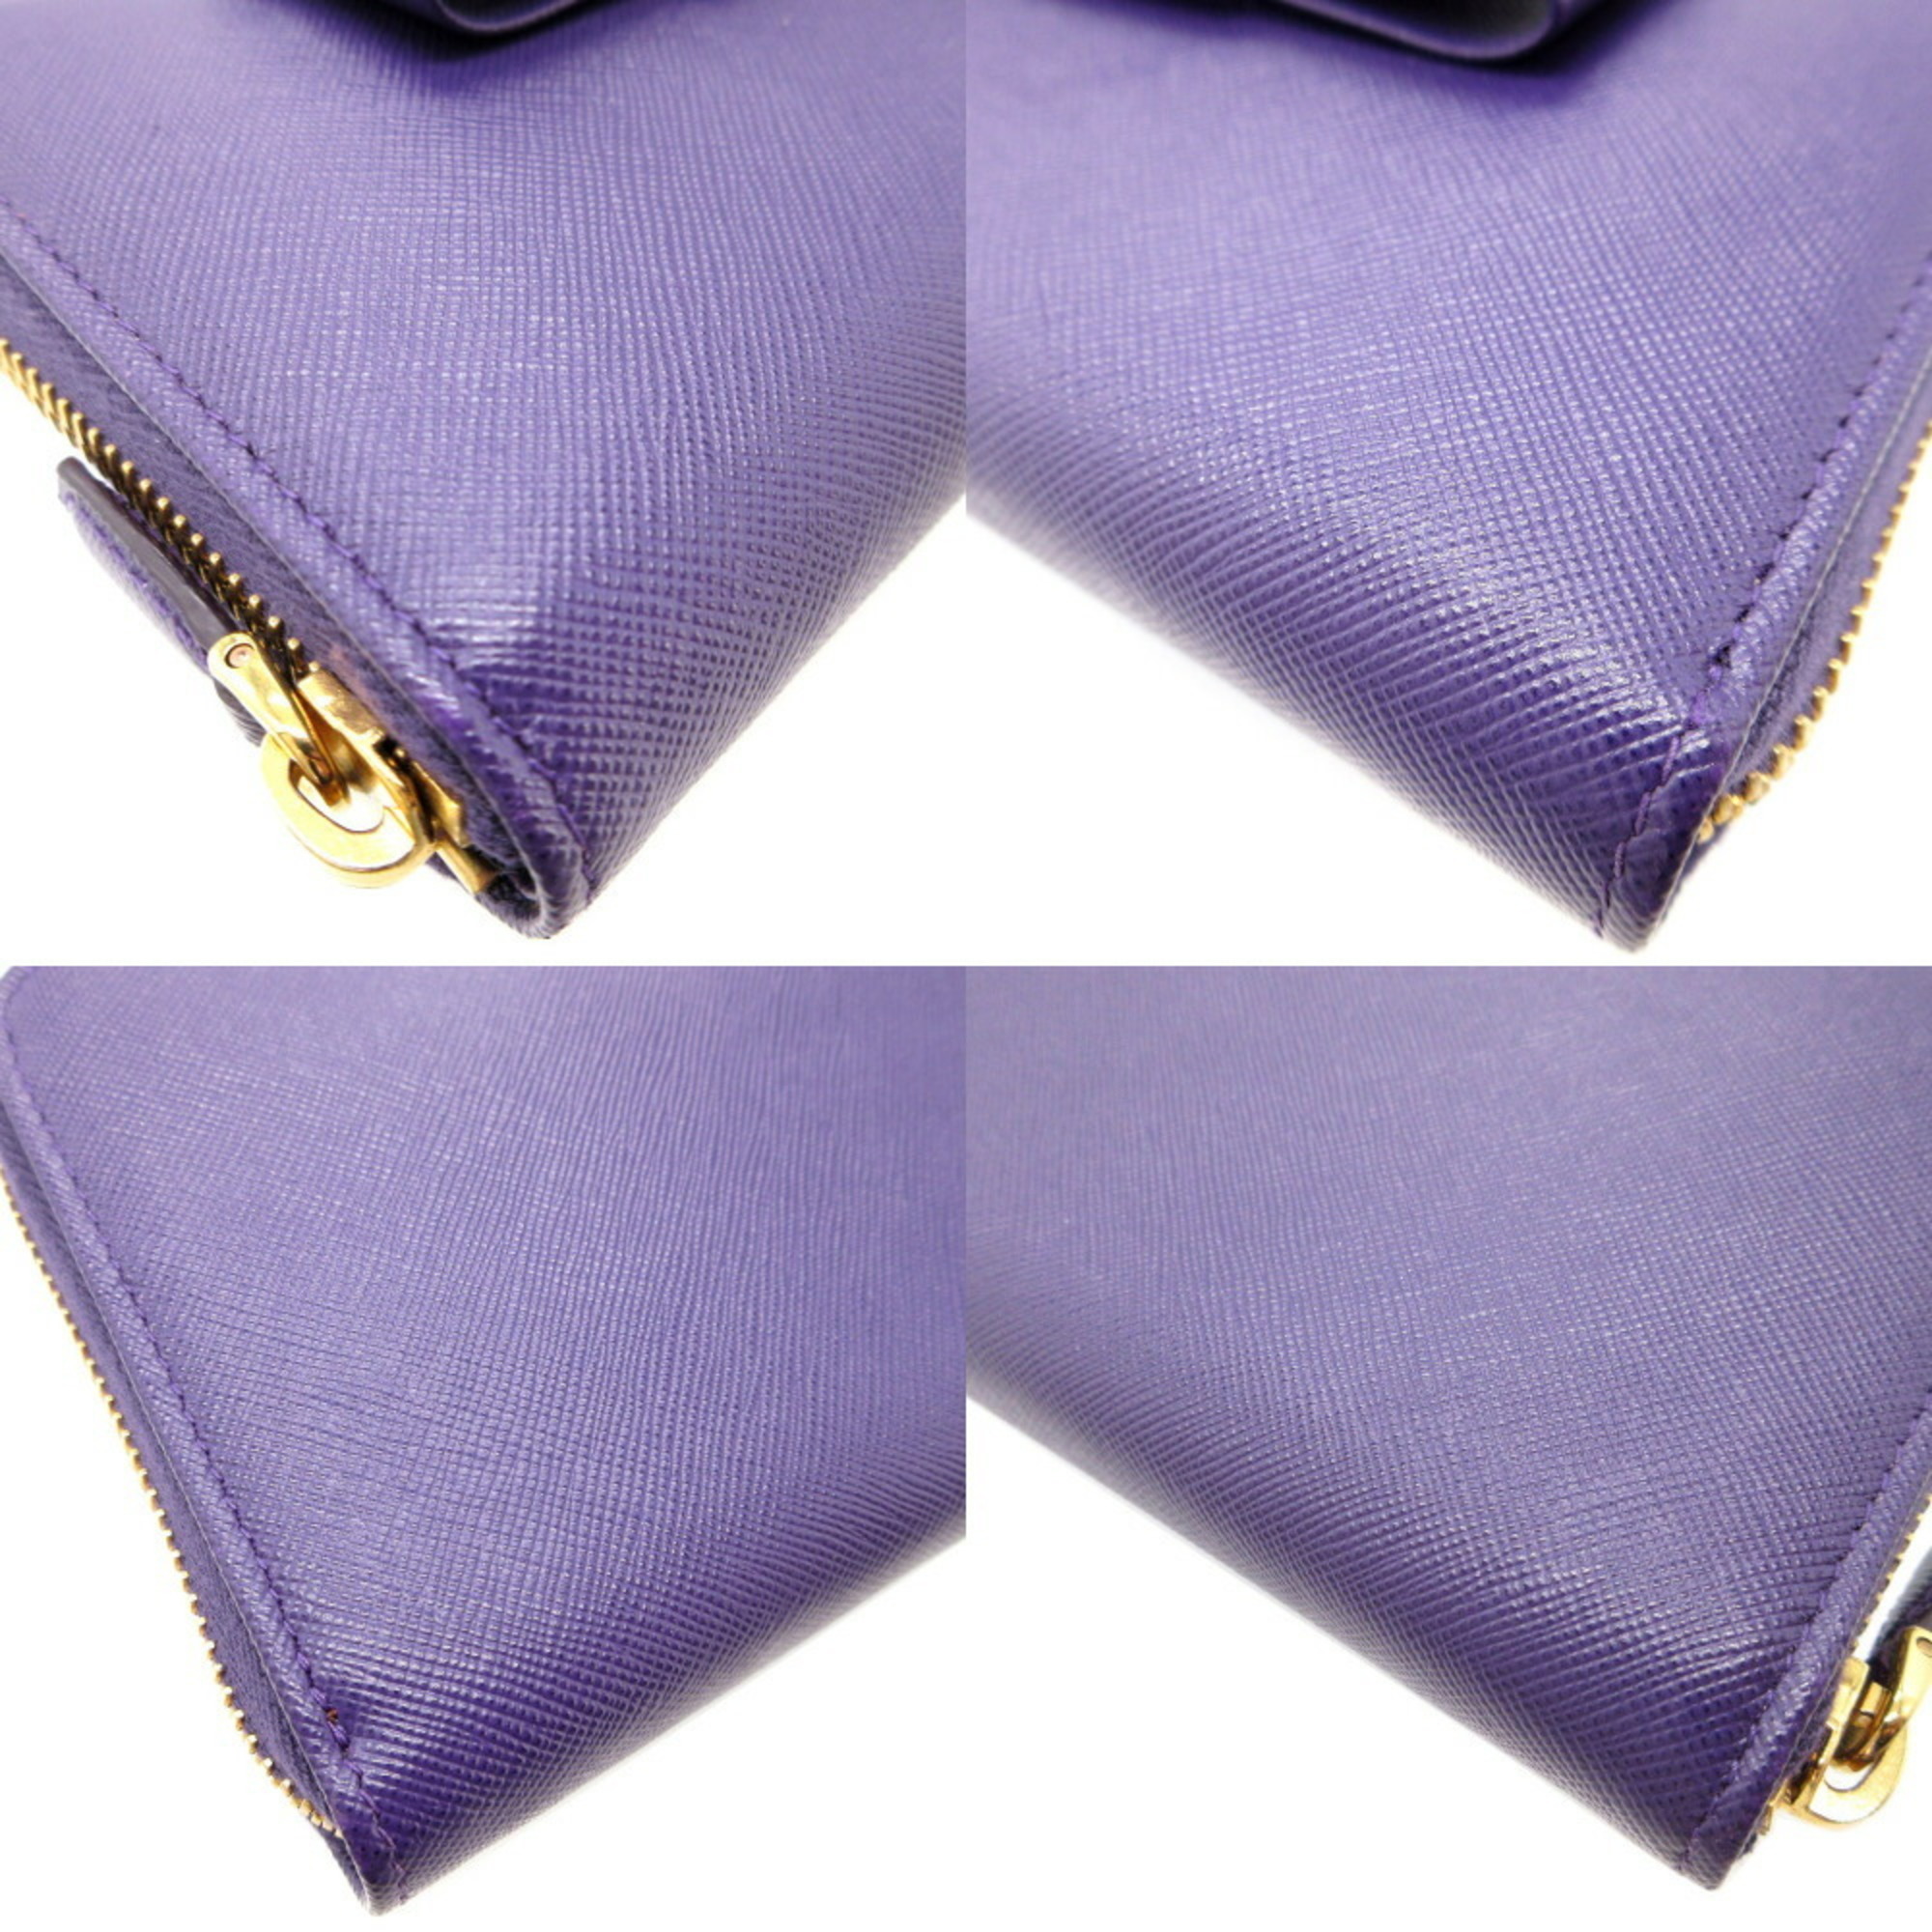 Prada 1M0506 Saffiano Leather Ribbon Purple Round Long Wallet 0016PRADA